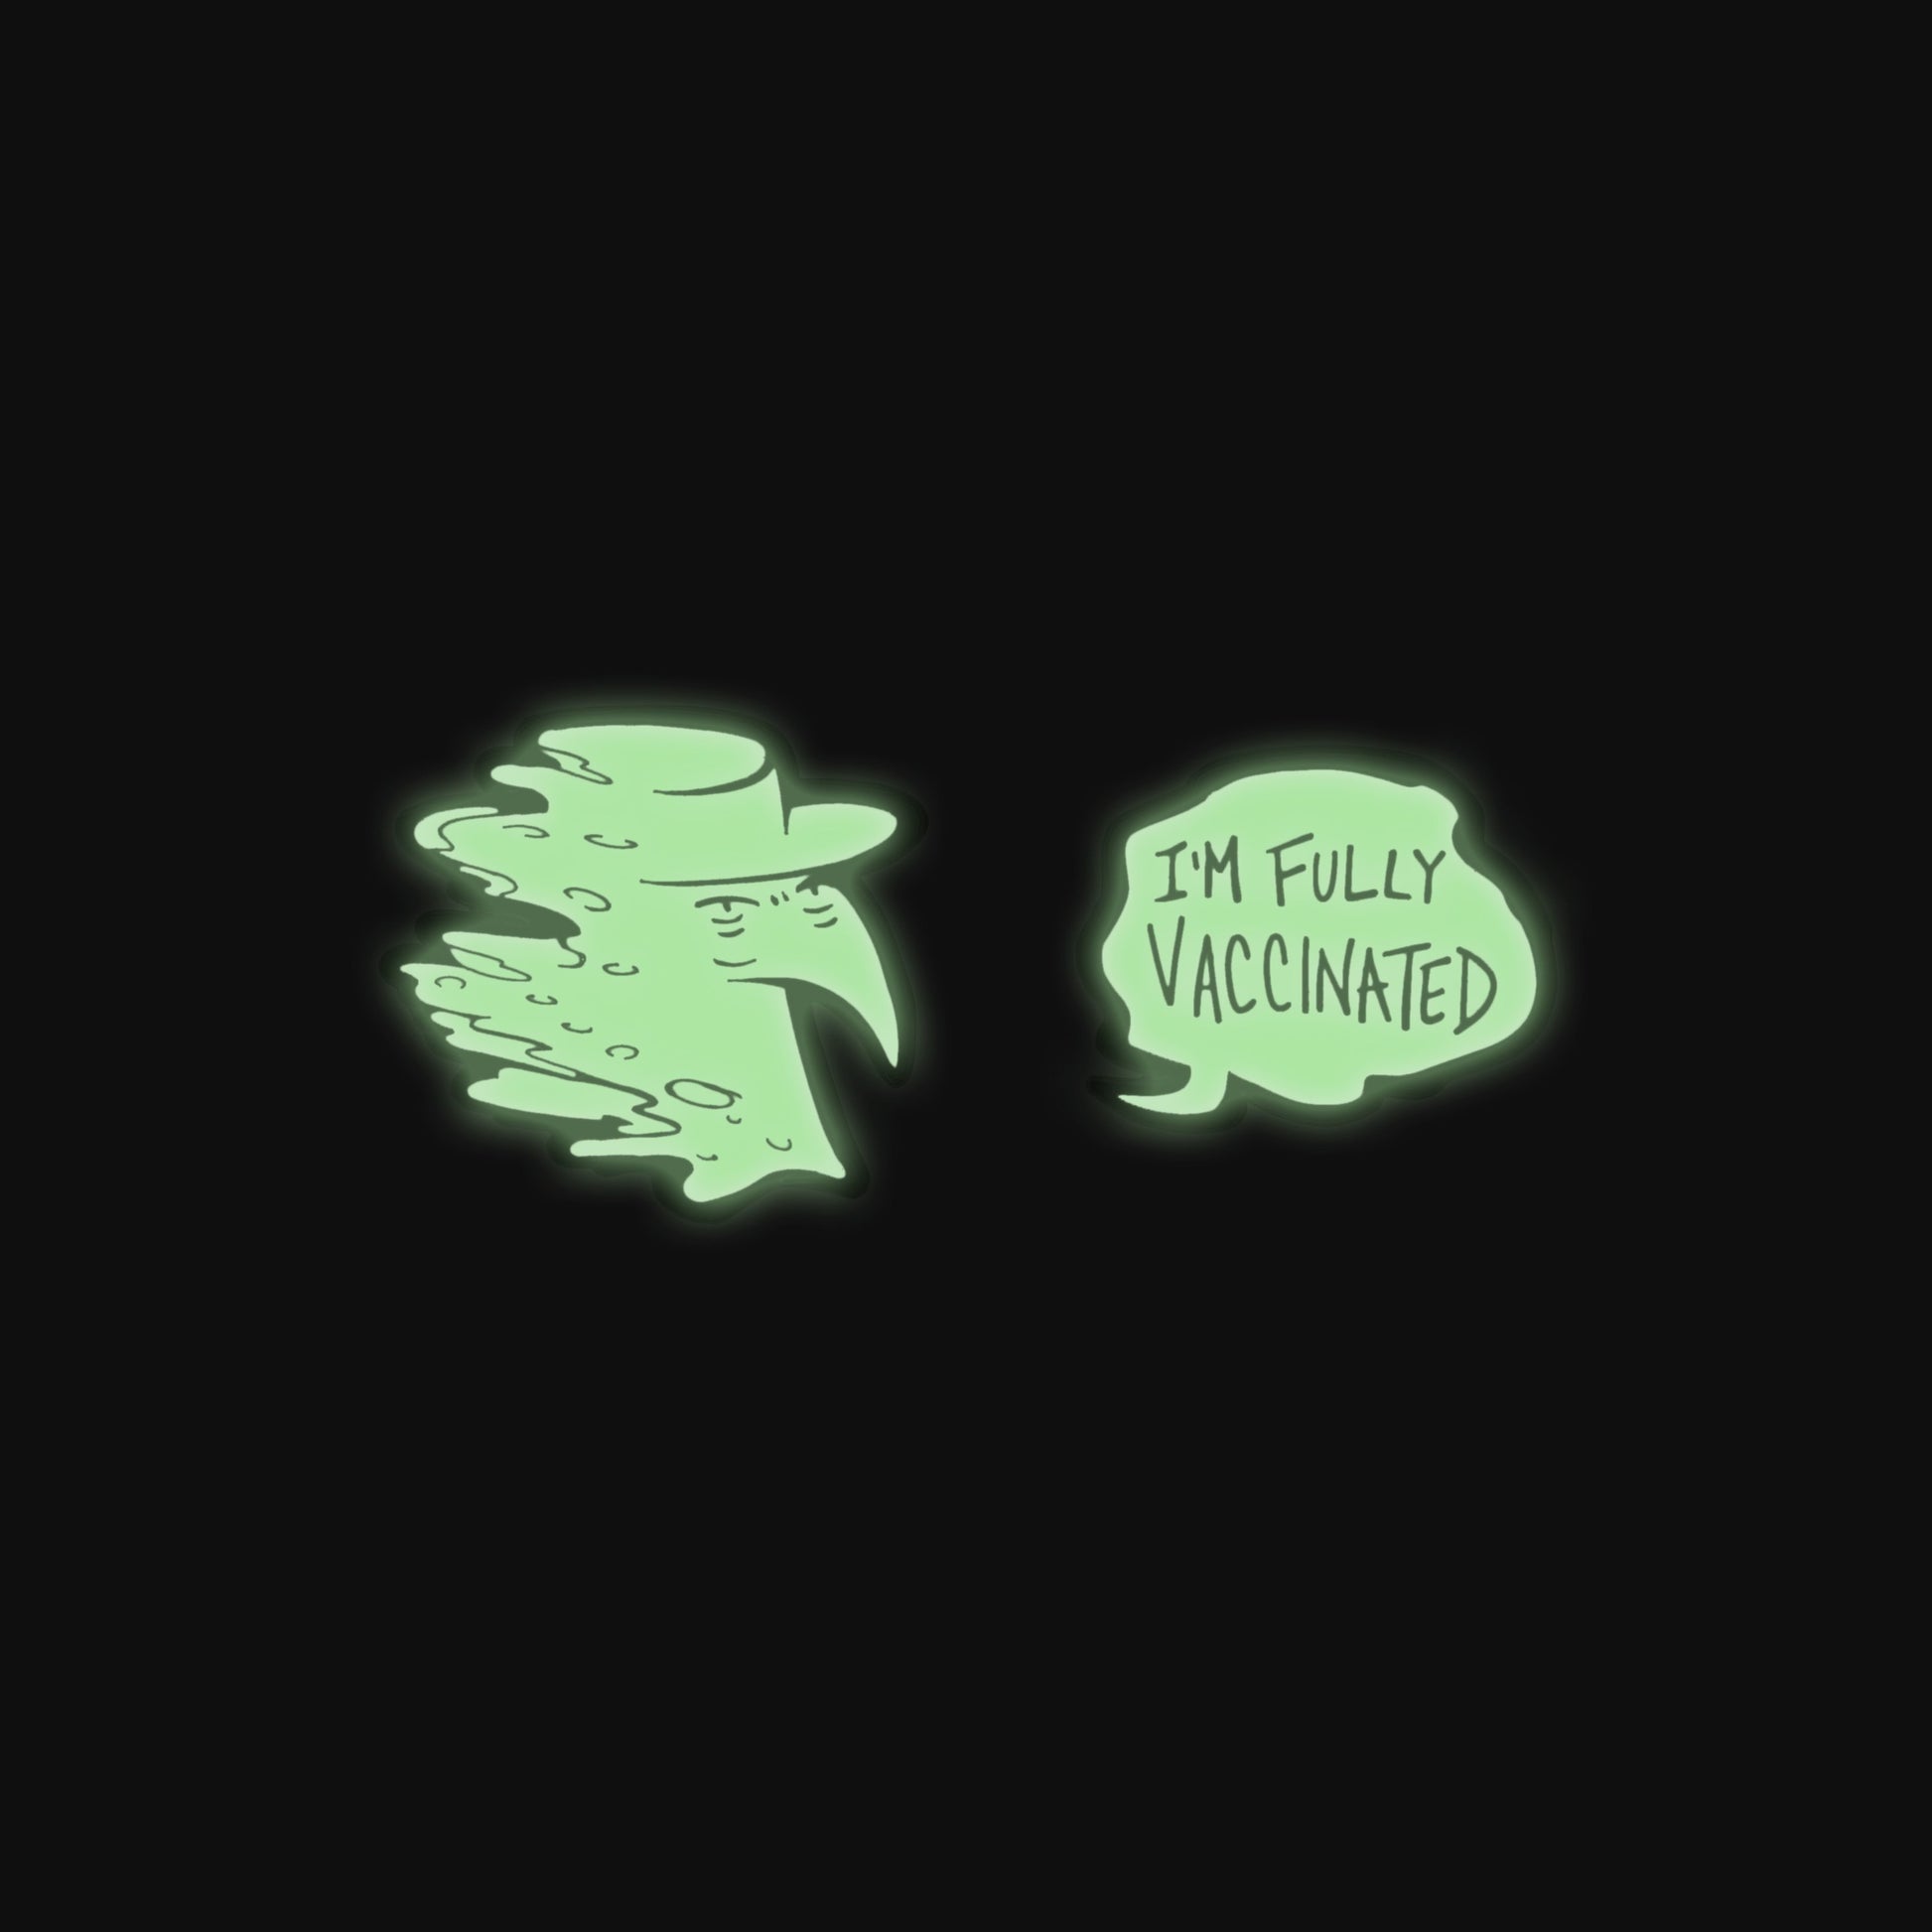 Both Spooky Peter pins glowing green in the dark!